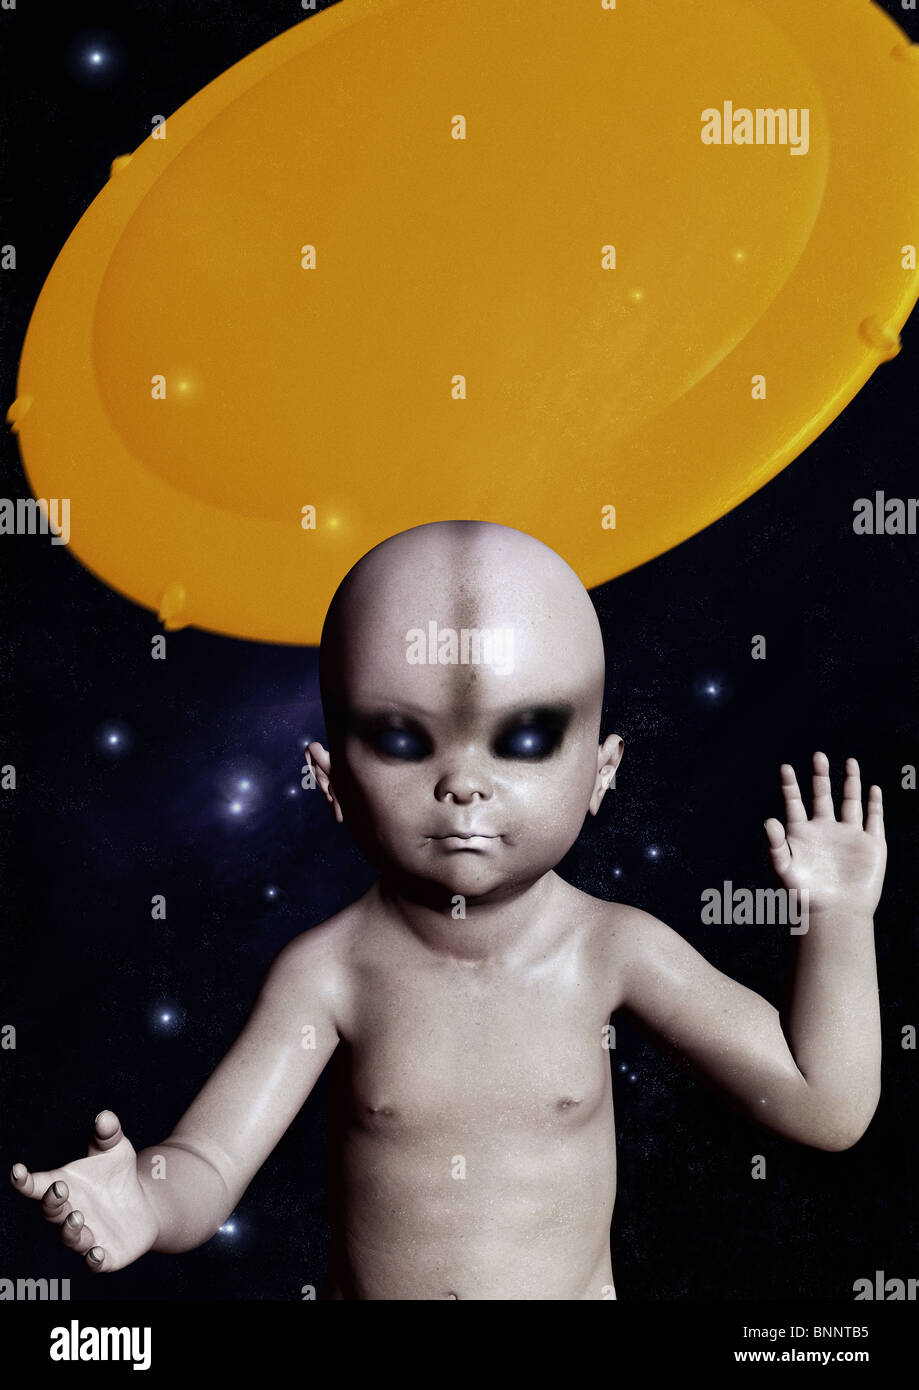 Disfraz infantil de ovni alienígena marciano